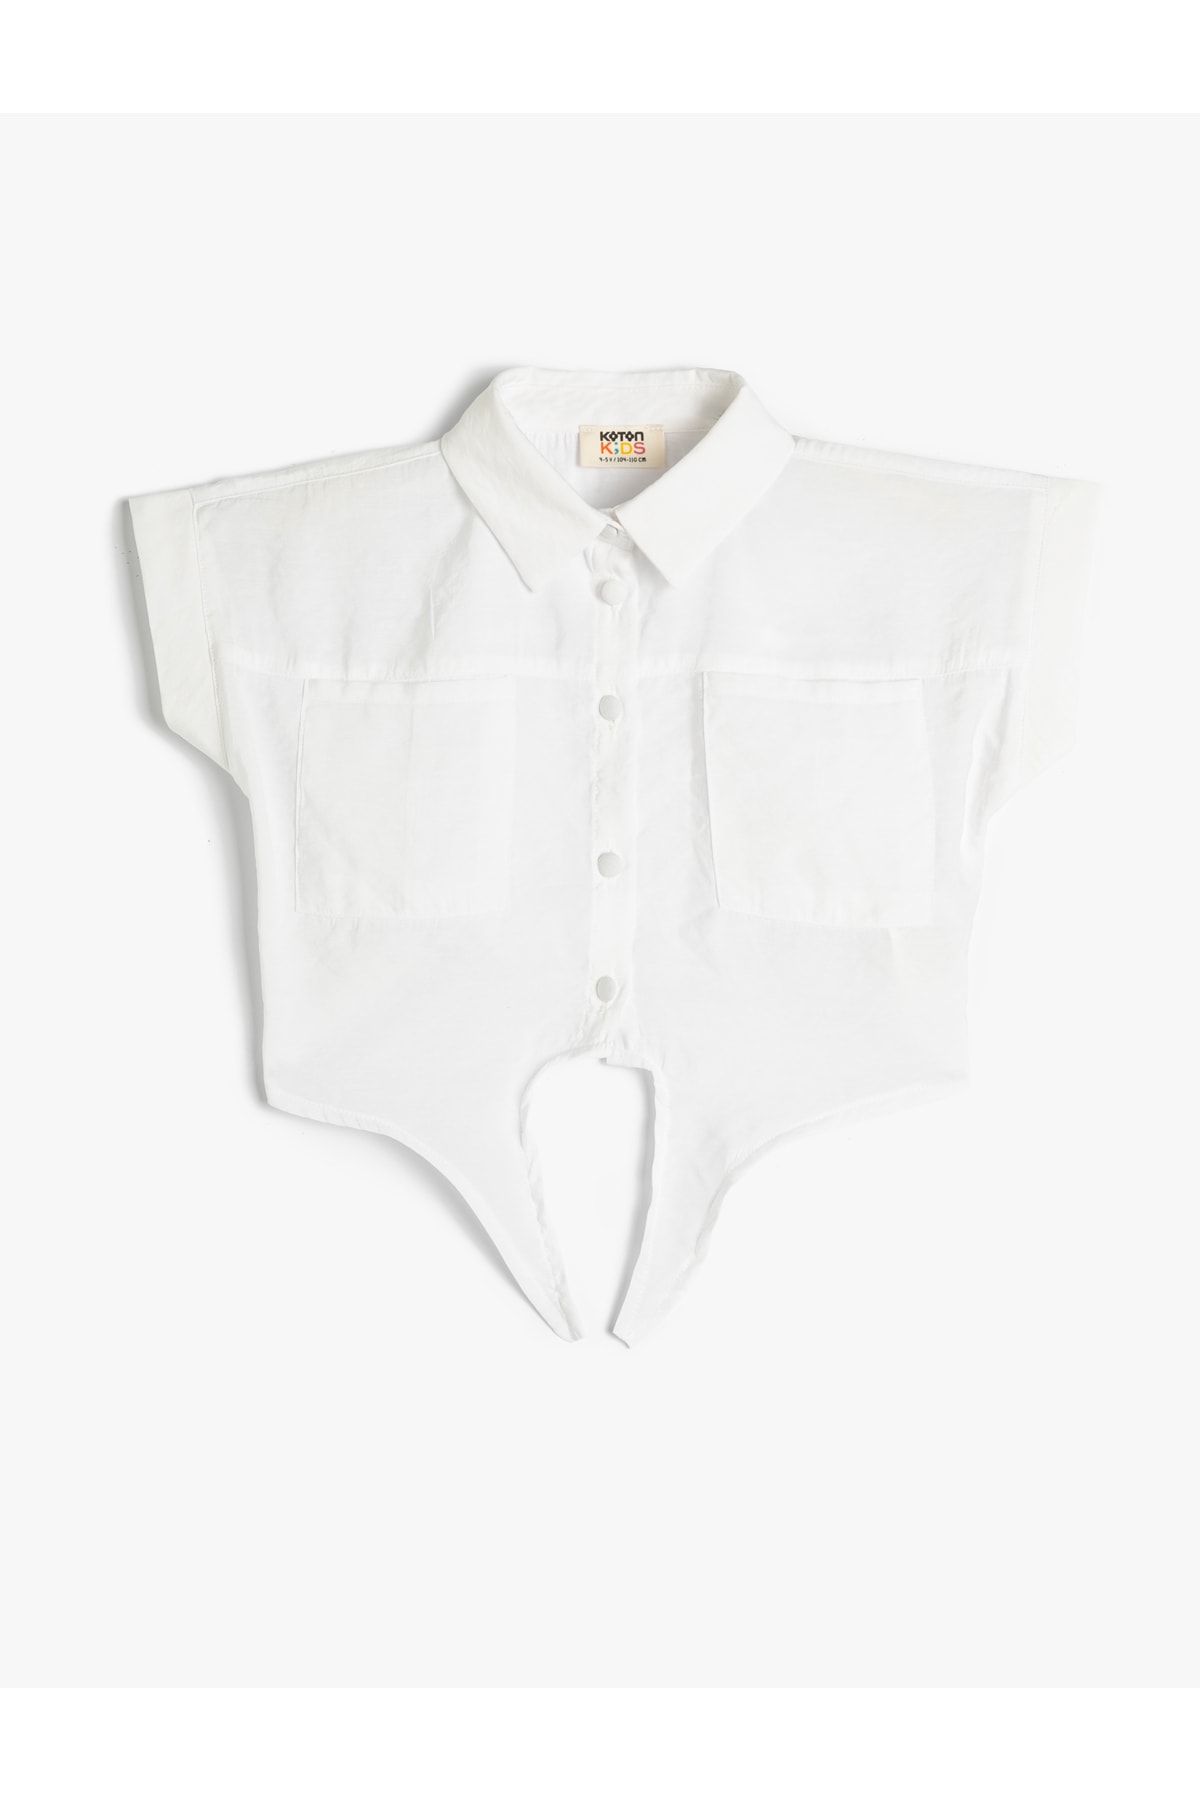 Koton Hemd Weiß Regular Fit Fast ausverkauft FN7495